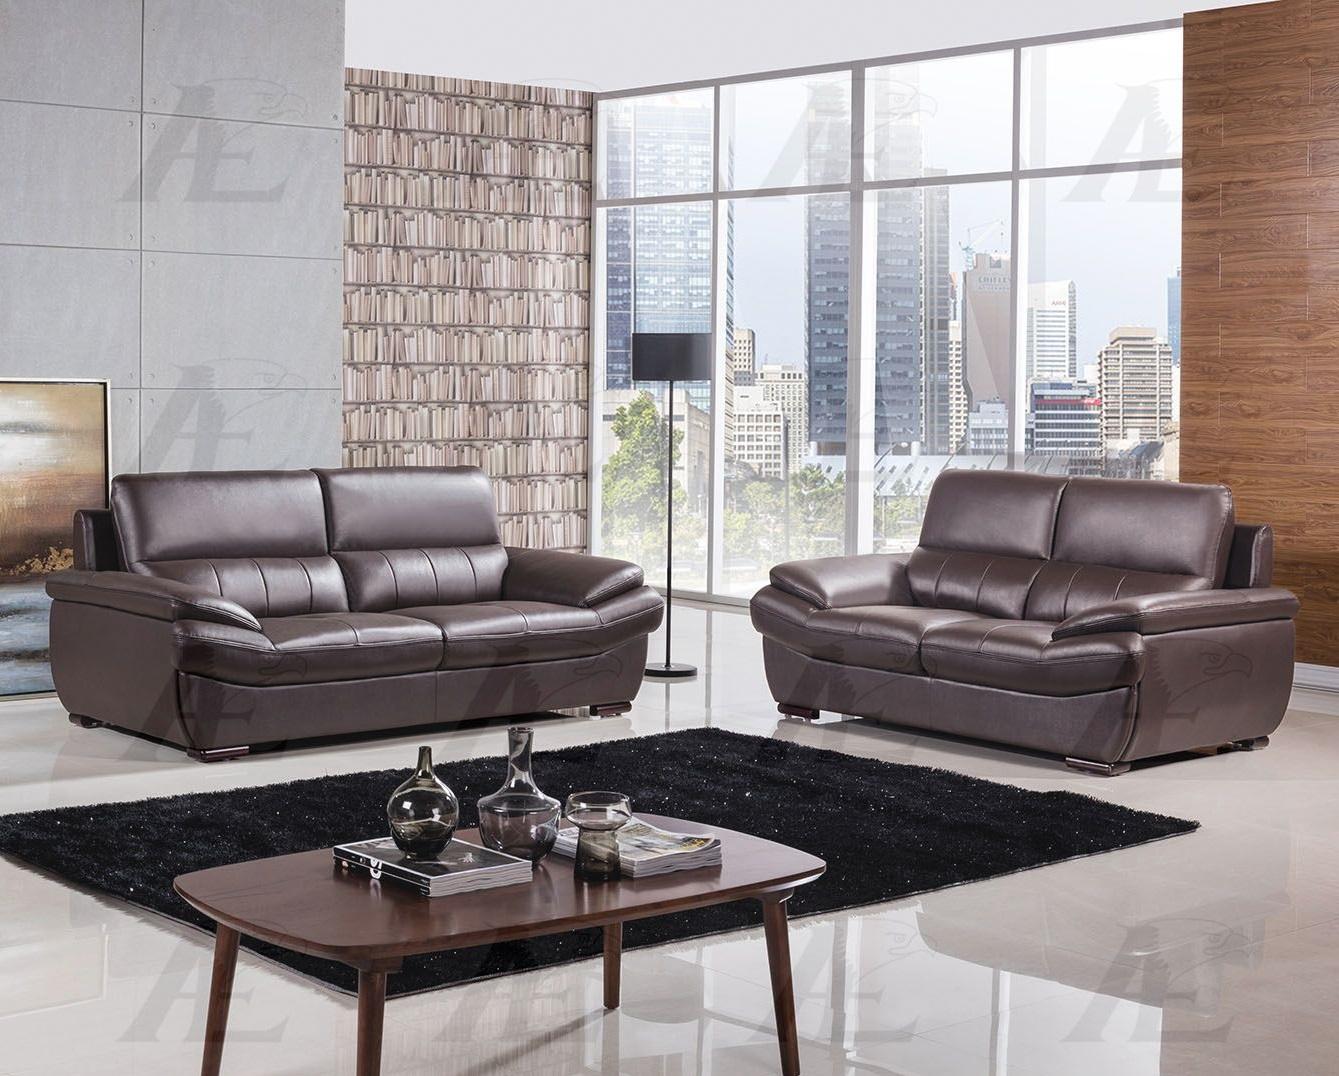 

    
American Eagle EK-B305 Dark Chocolate Genuine Leather Living Room Sofa Set 2pcs in Contemporary Style
